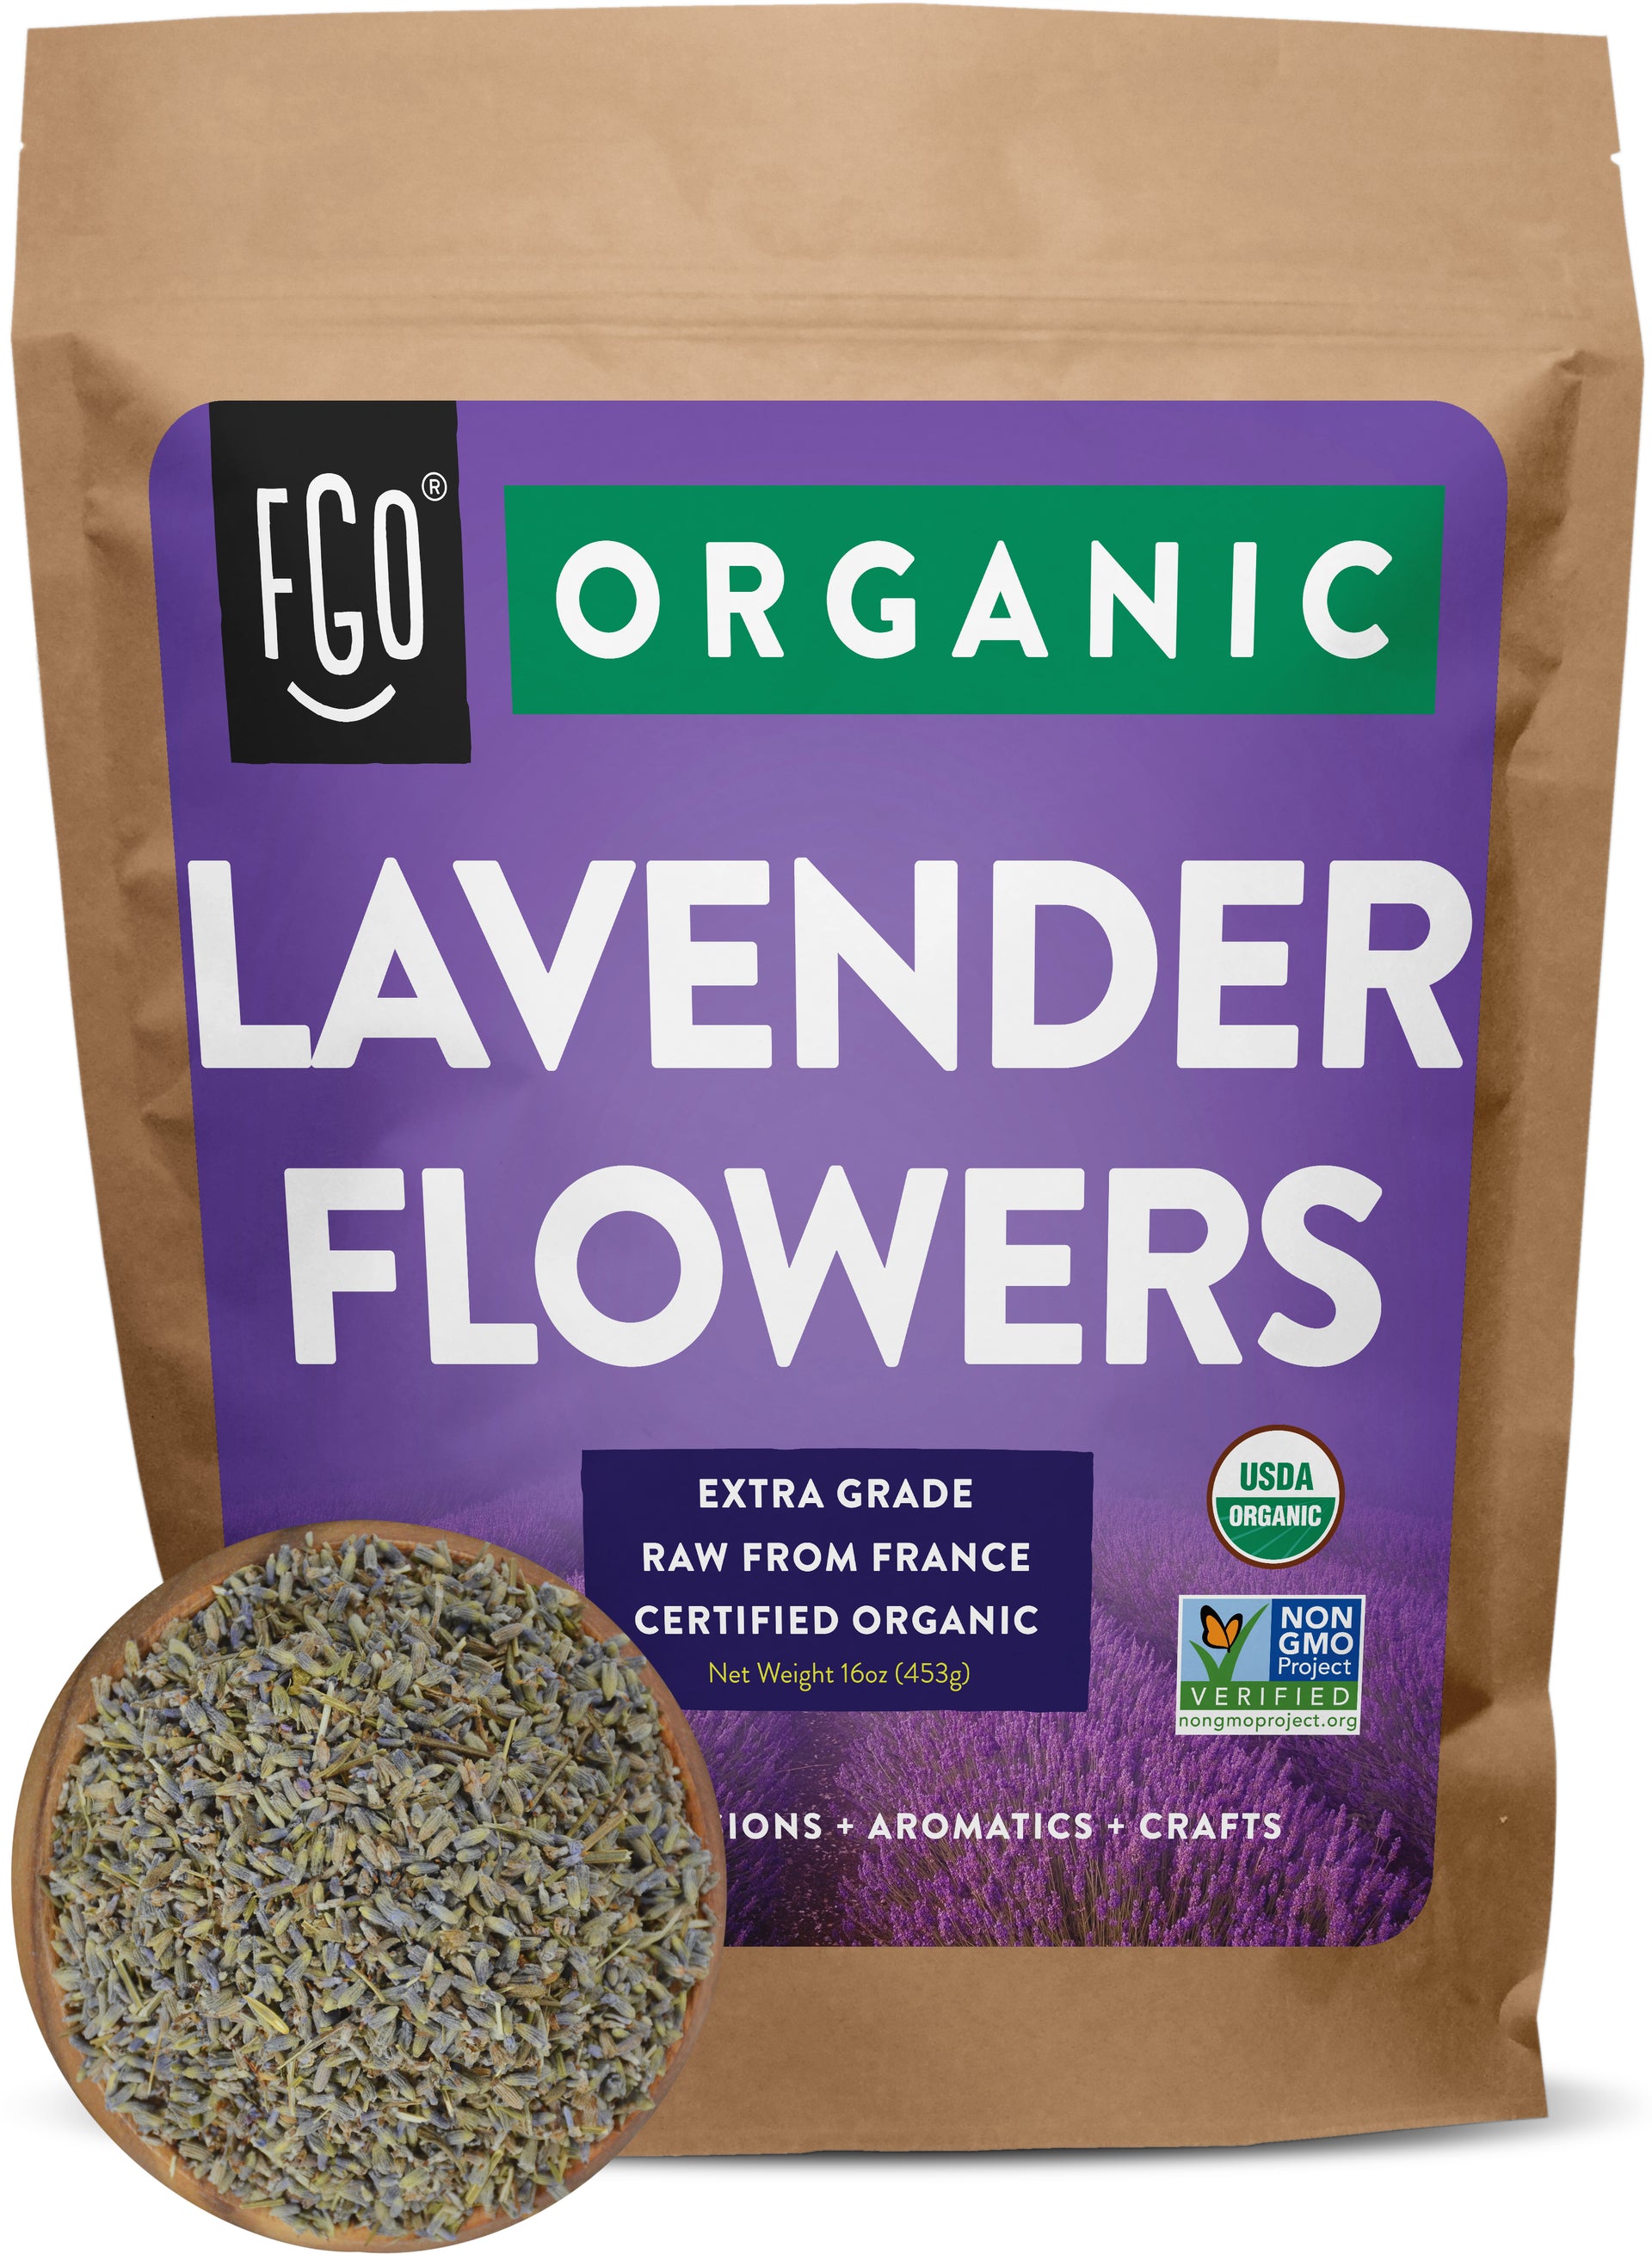 Single Organic Lavender Sachet (1 oz)